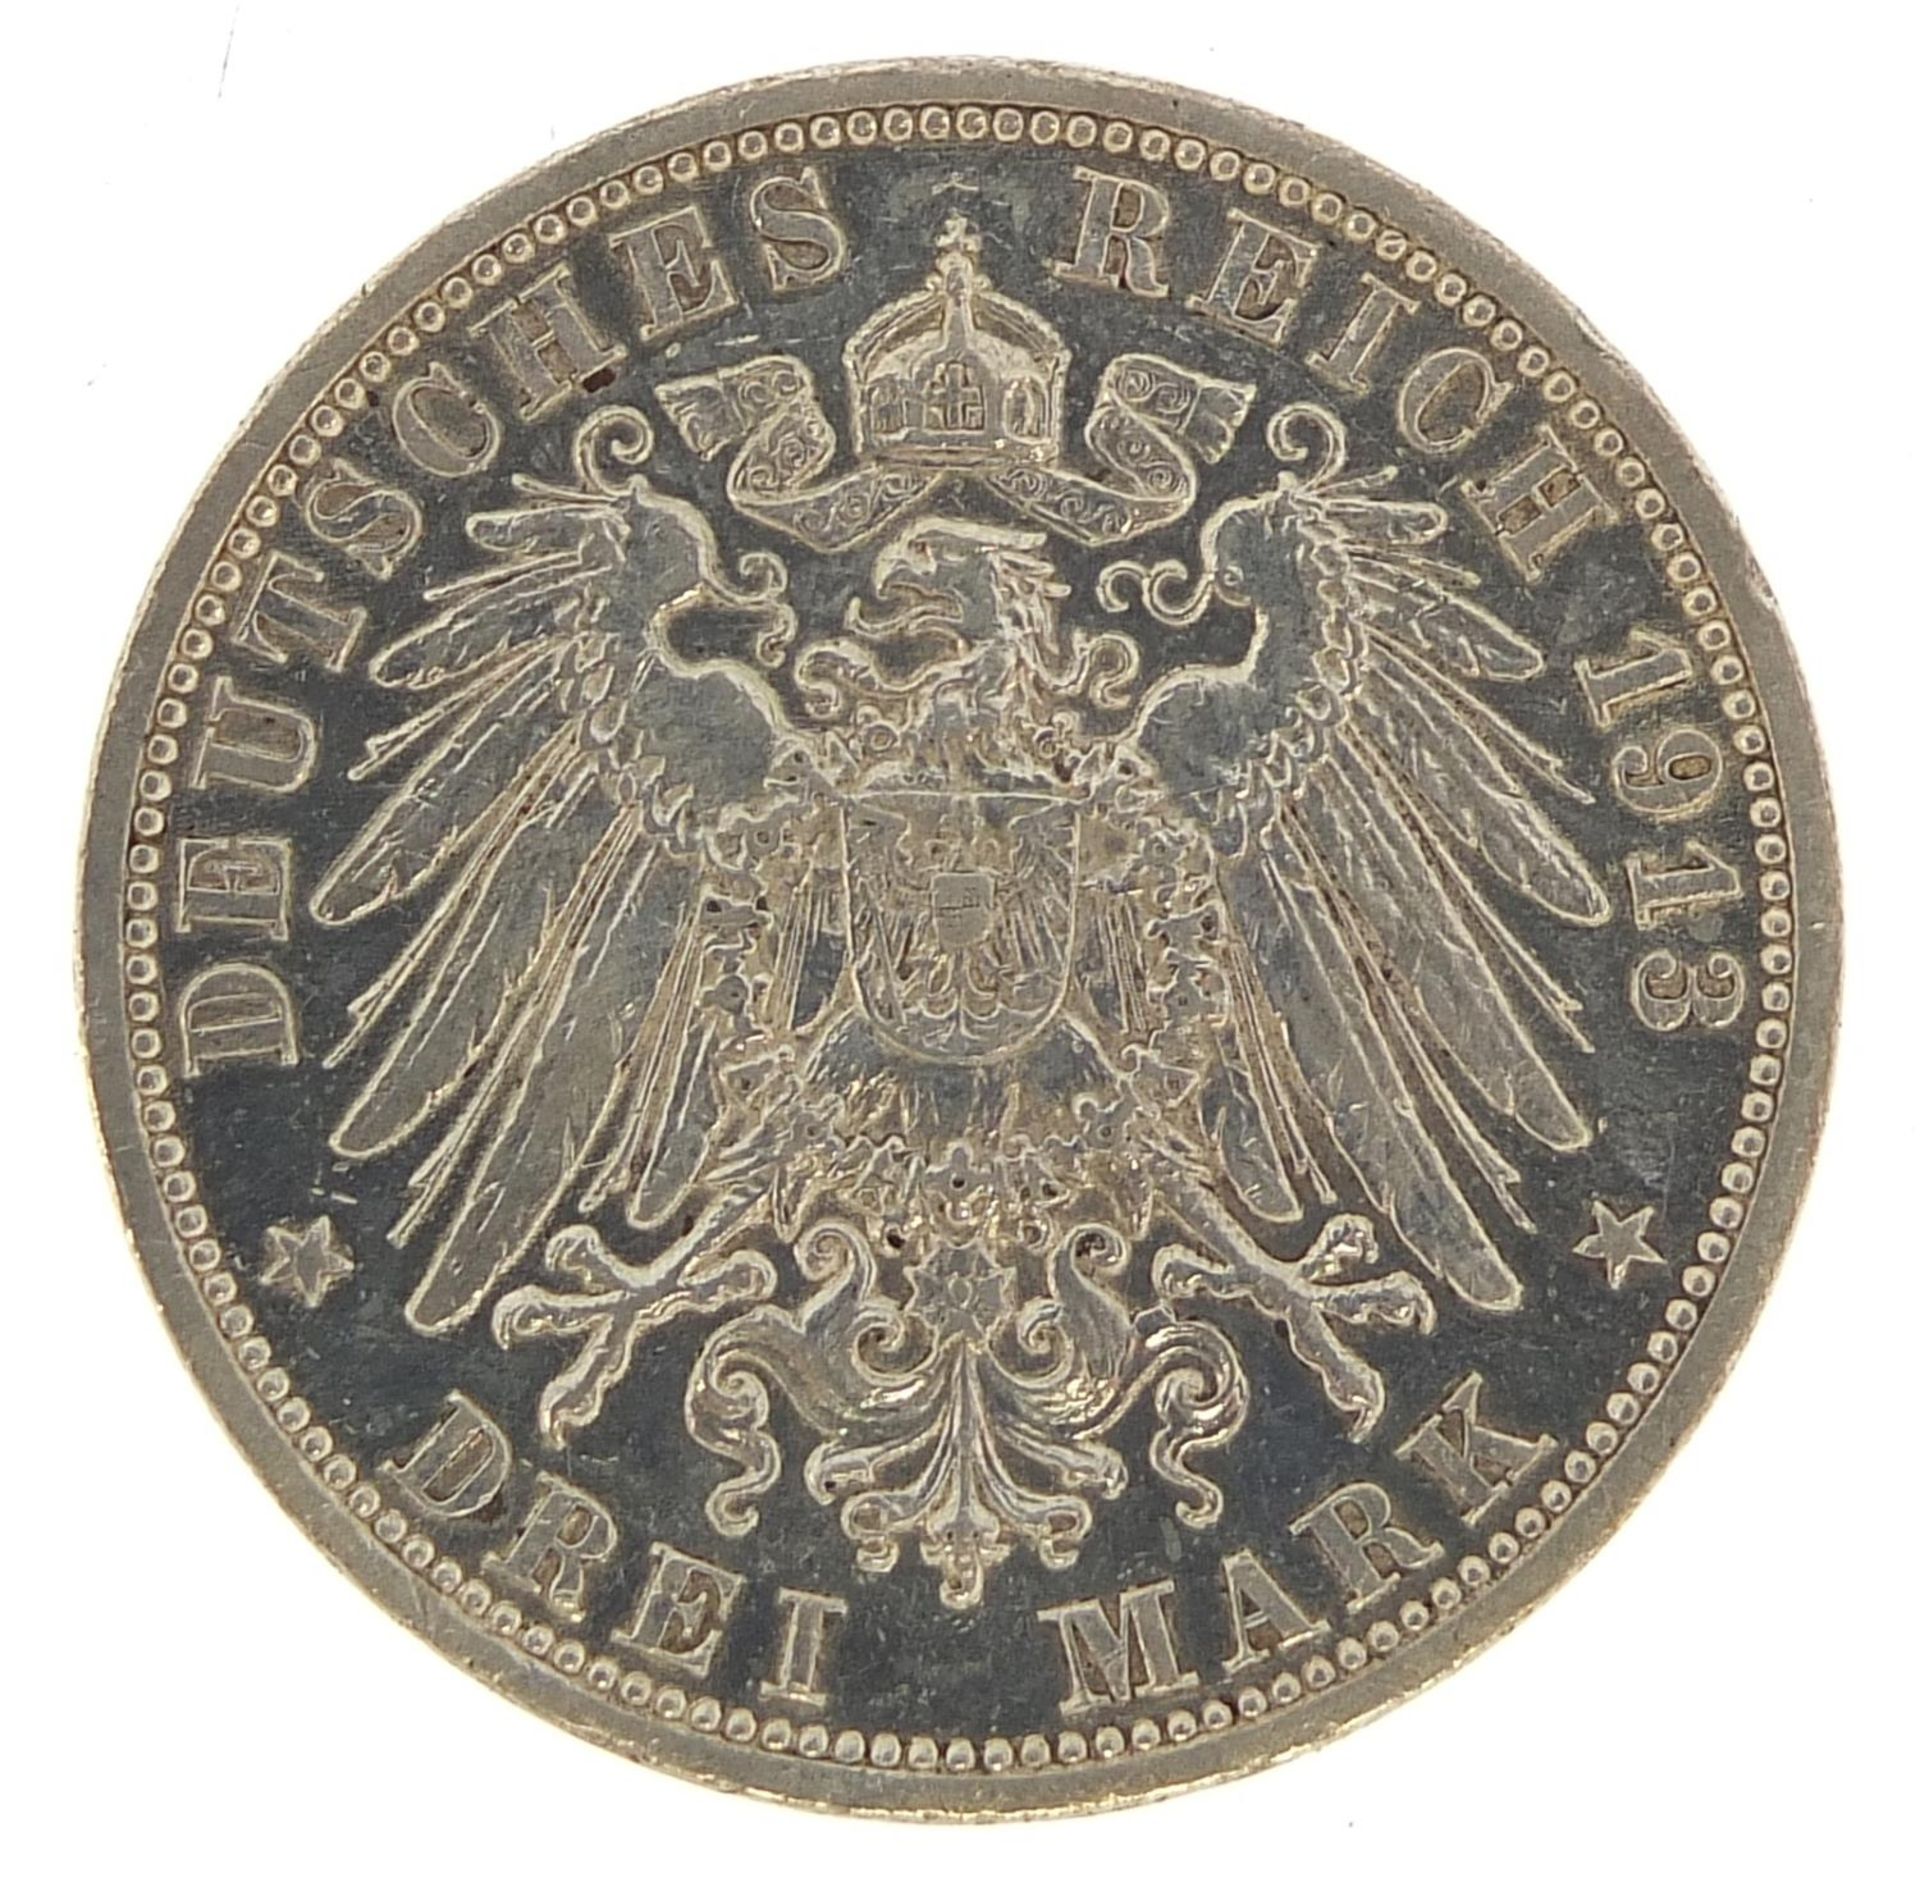 William II 1918 silver coin, 16.7g